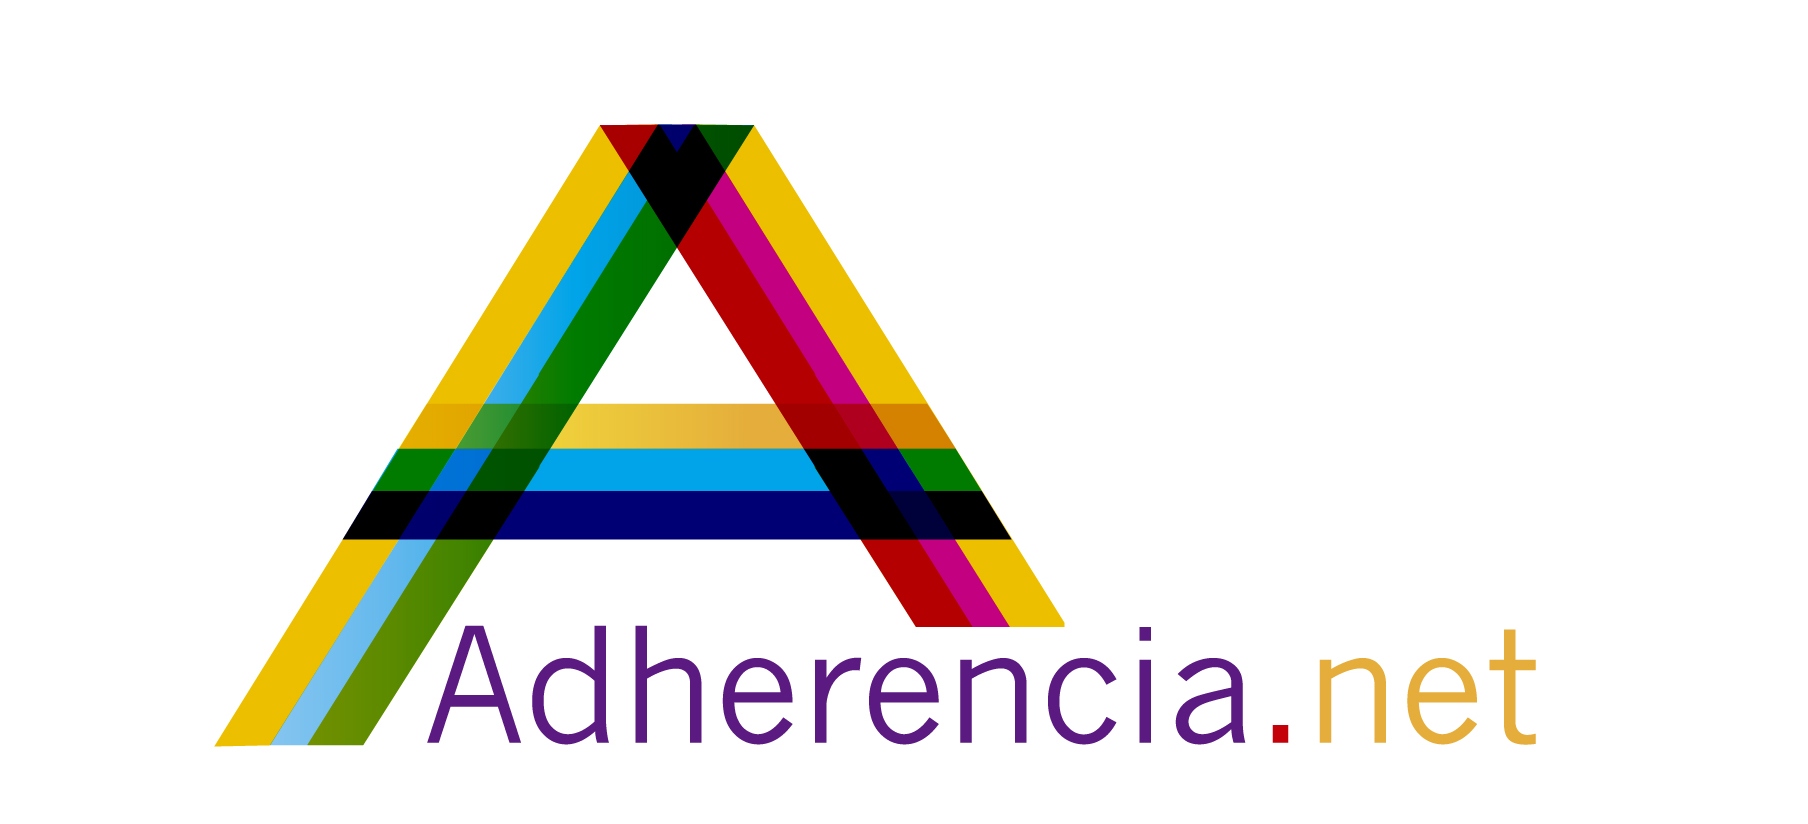 Adherebcia logo